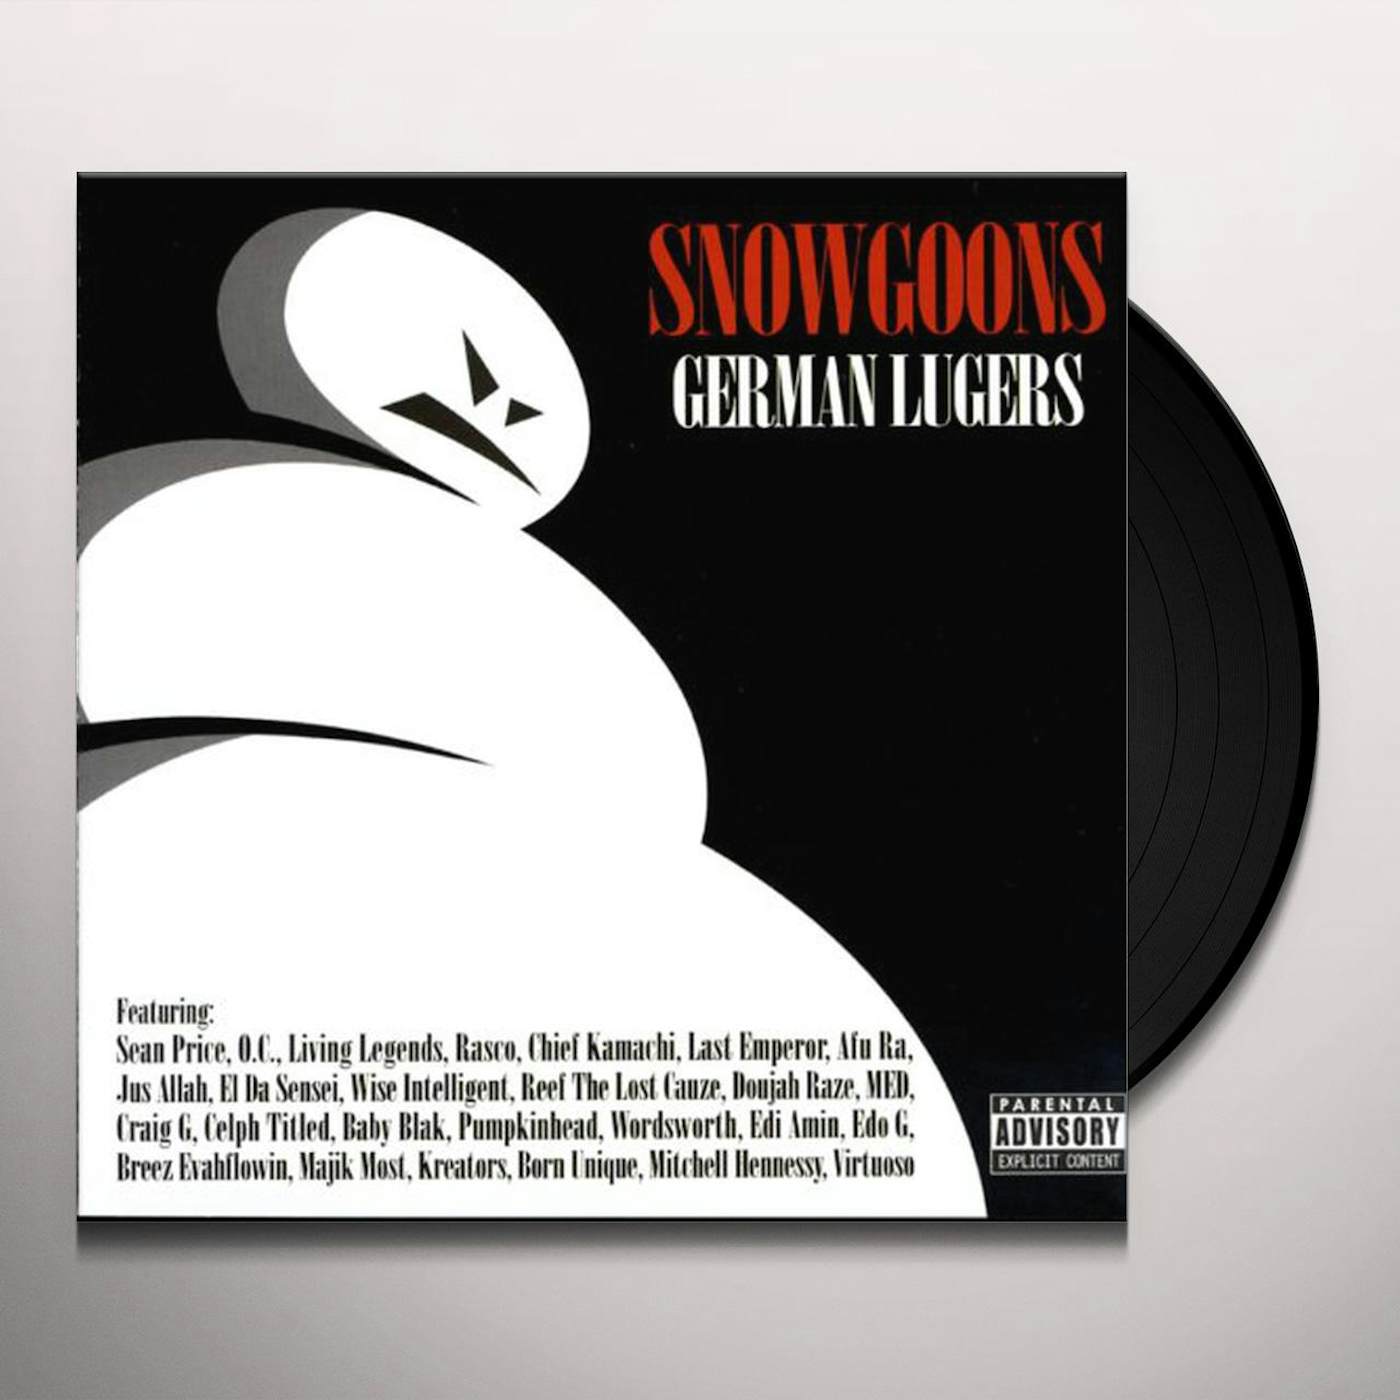 Snowgoons German Lugers Vinyl Record